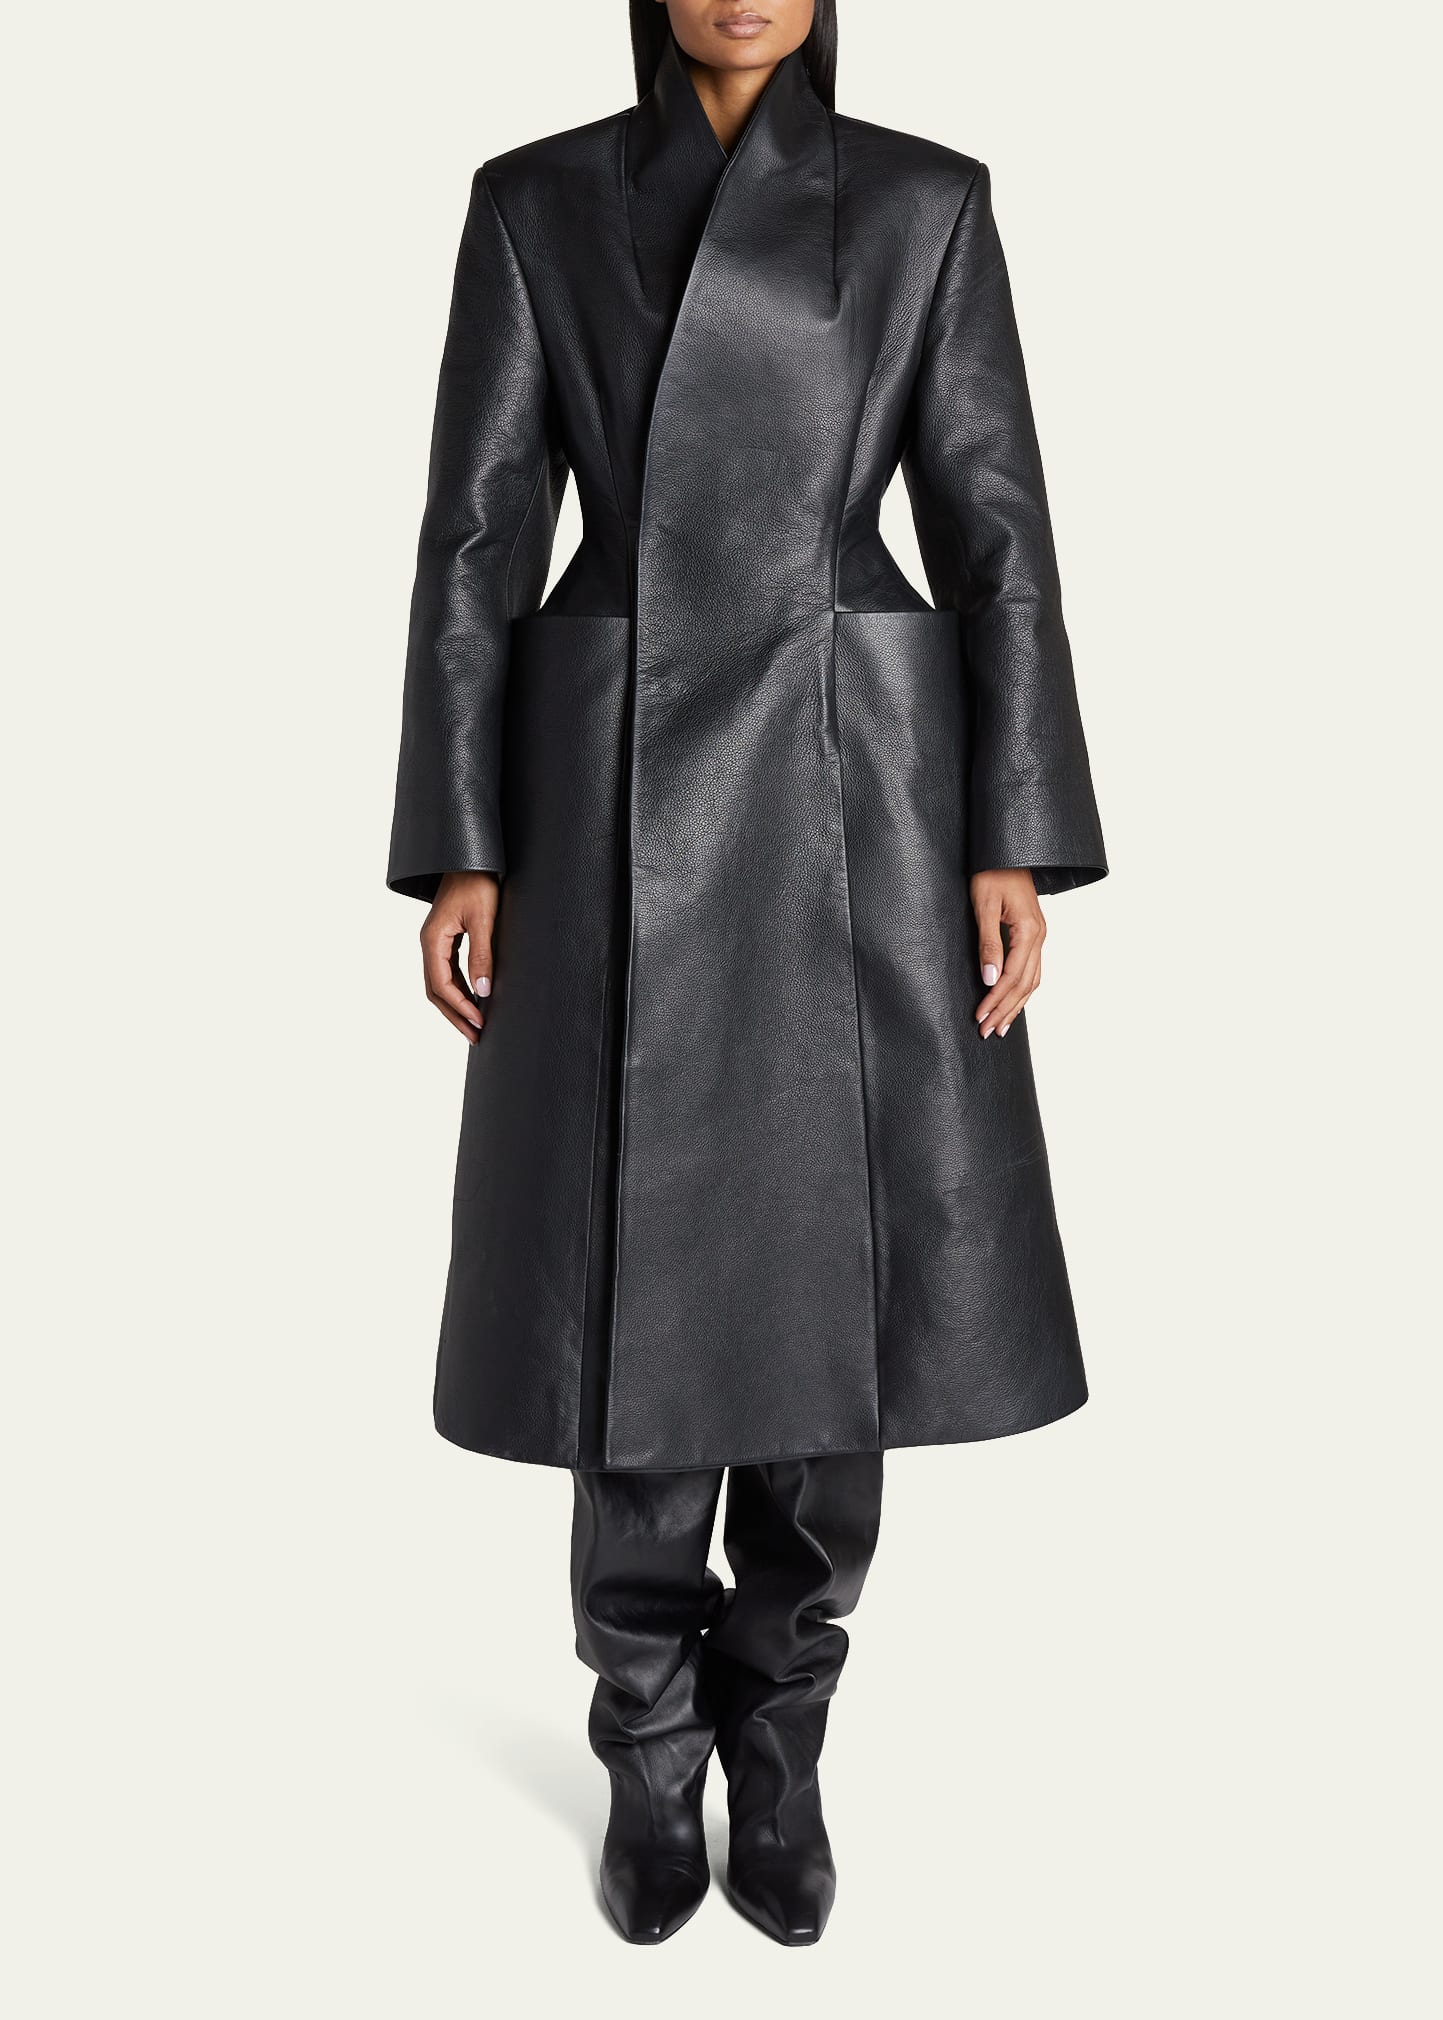 Balenciaga Hourglass Leather Coat